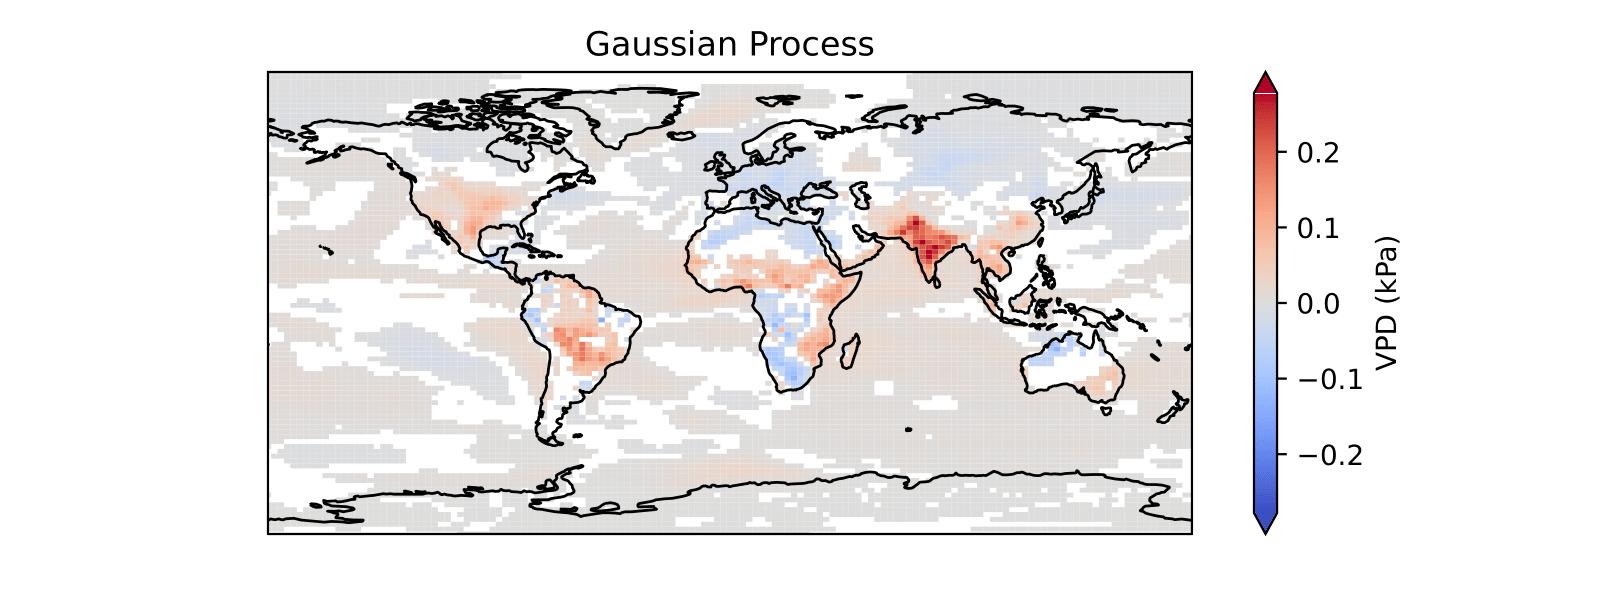 Gaussian Process Model Predictions